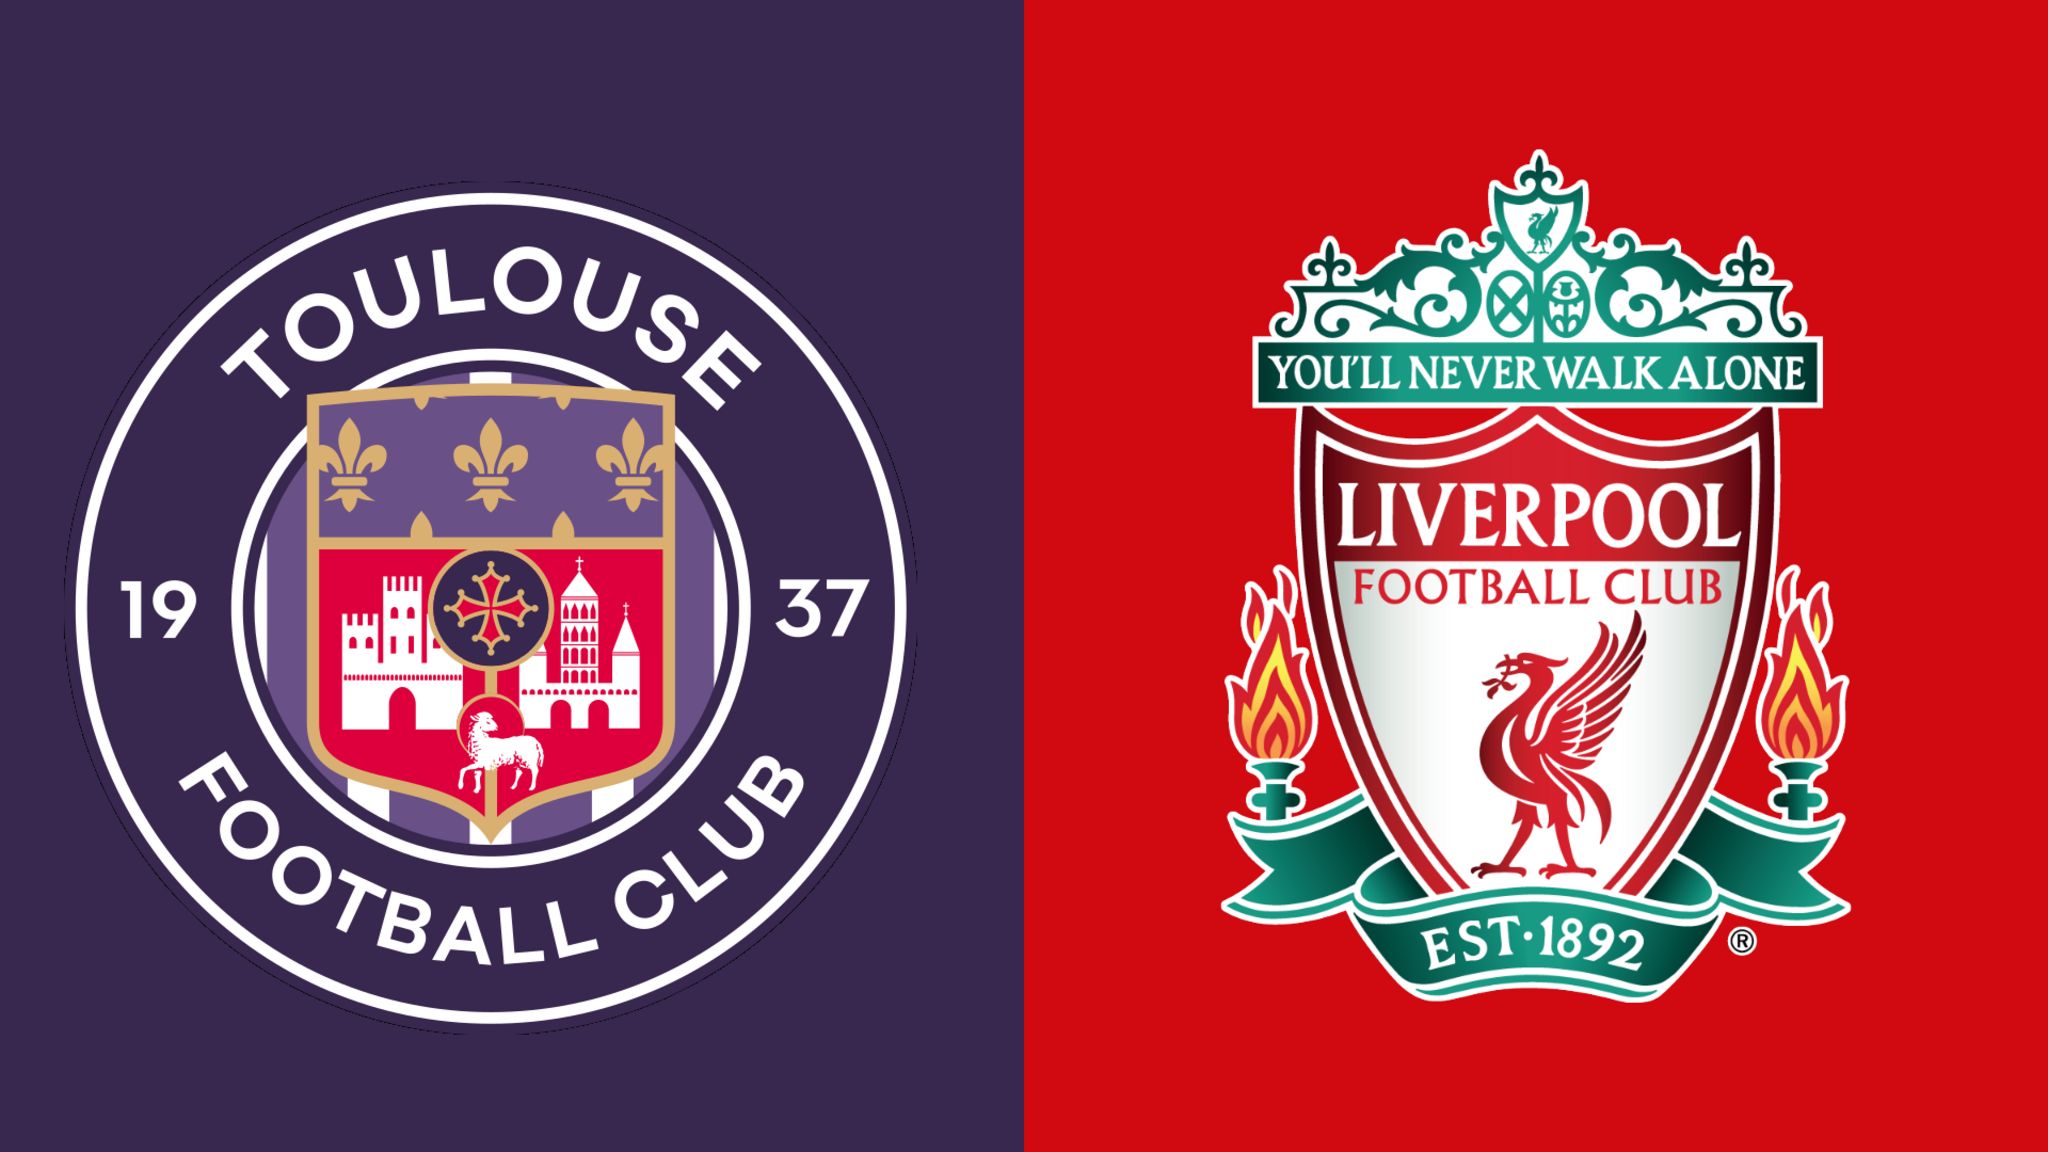 Follow Toulouse v Liverpool live